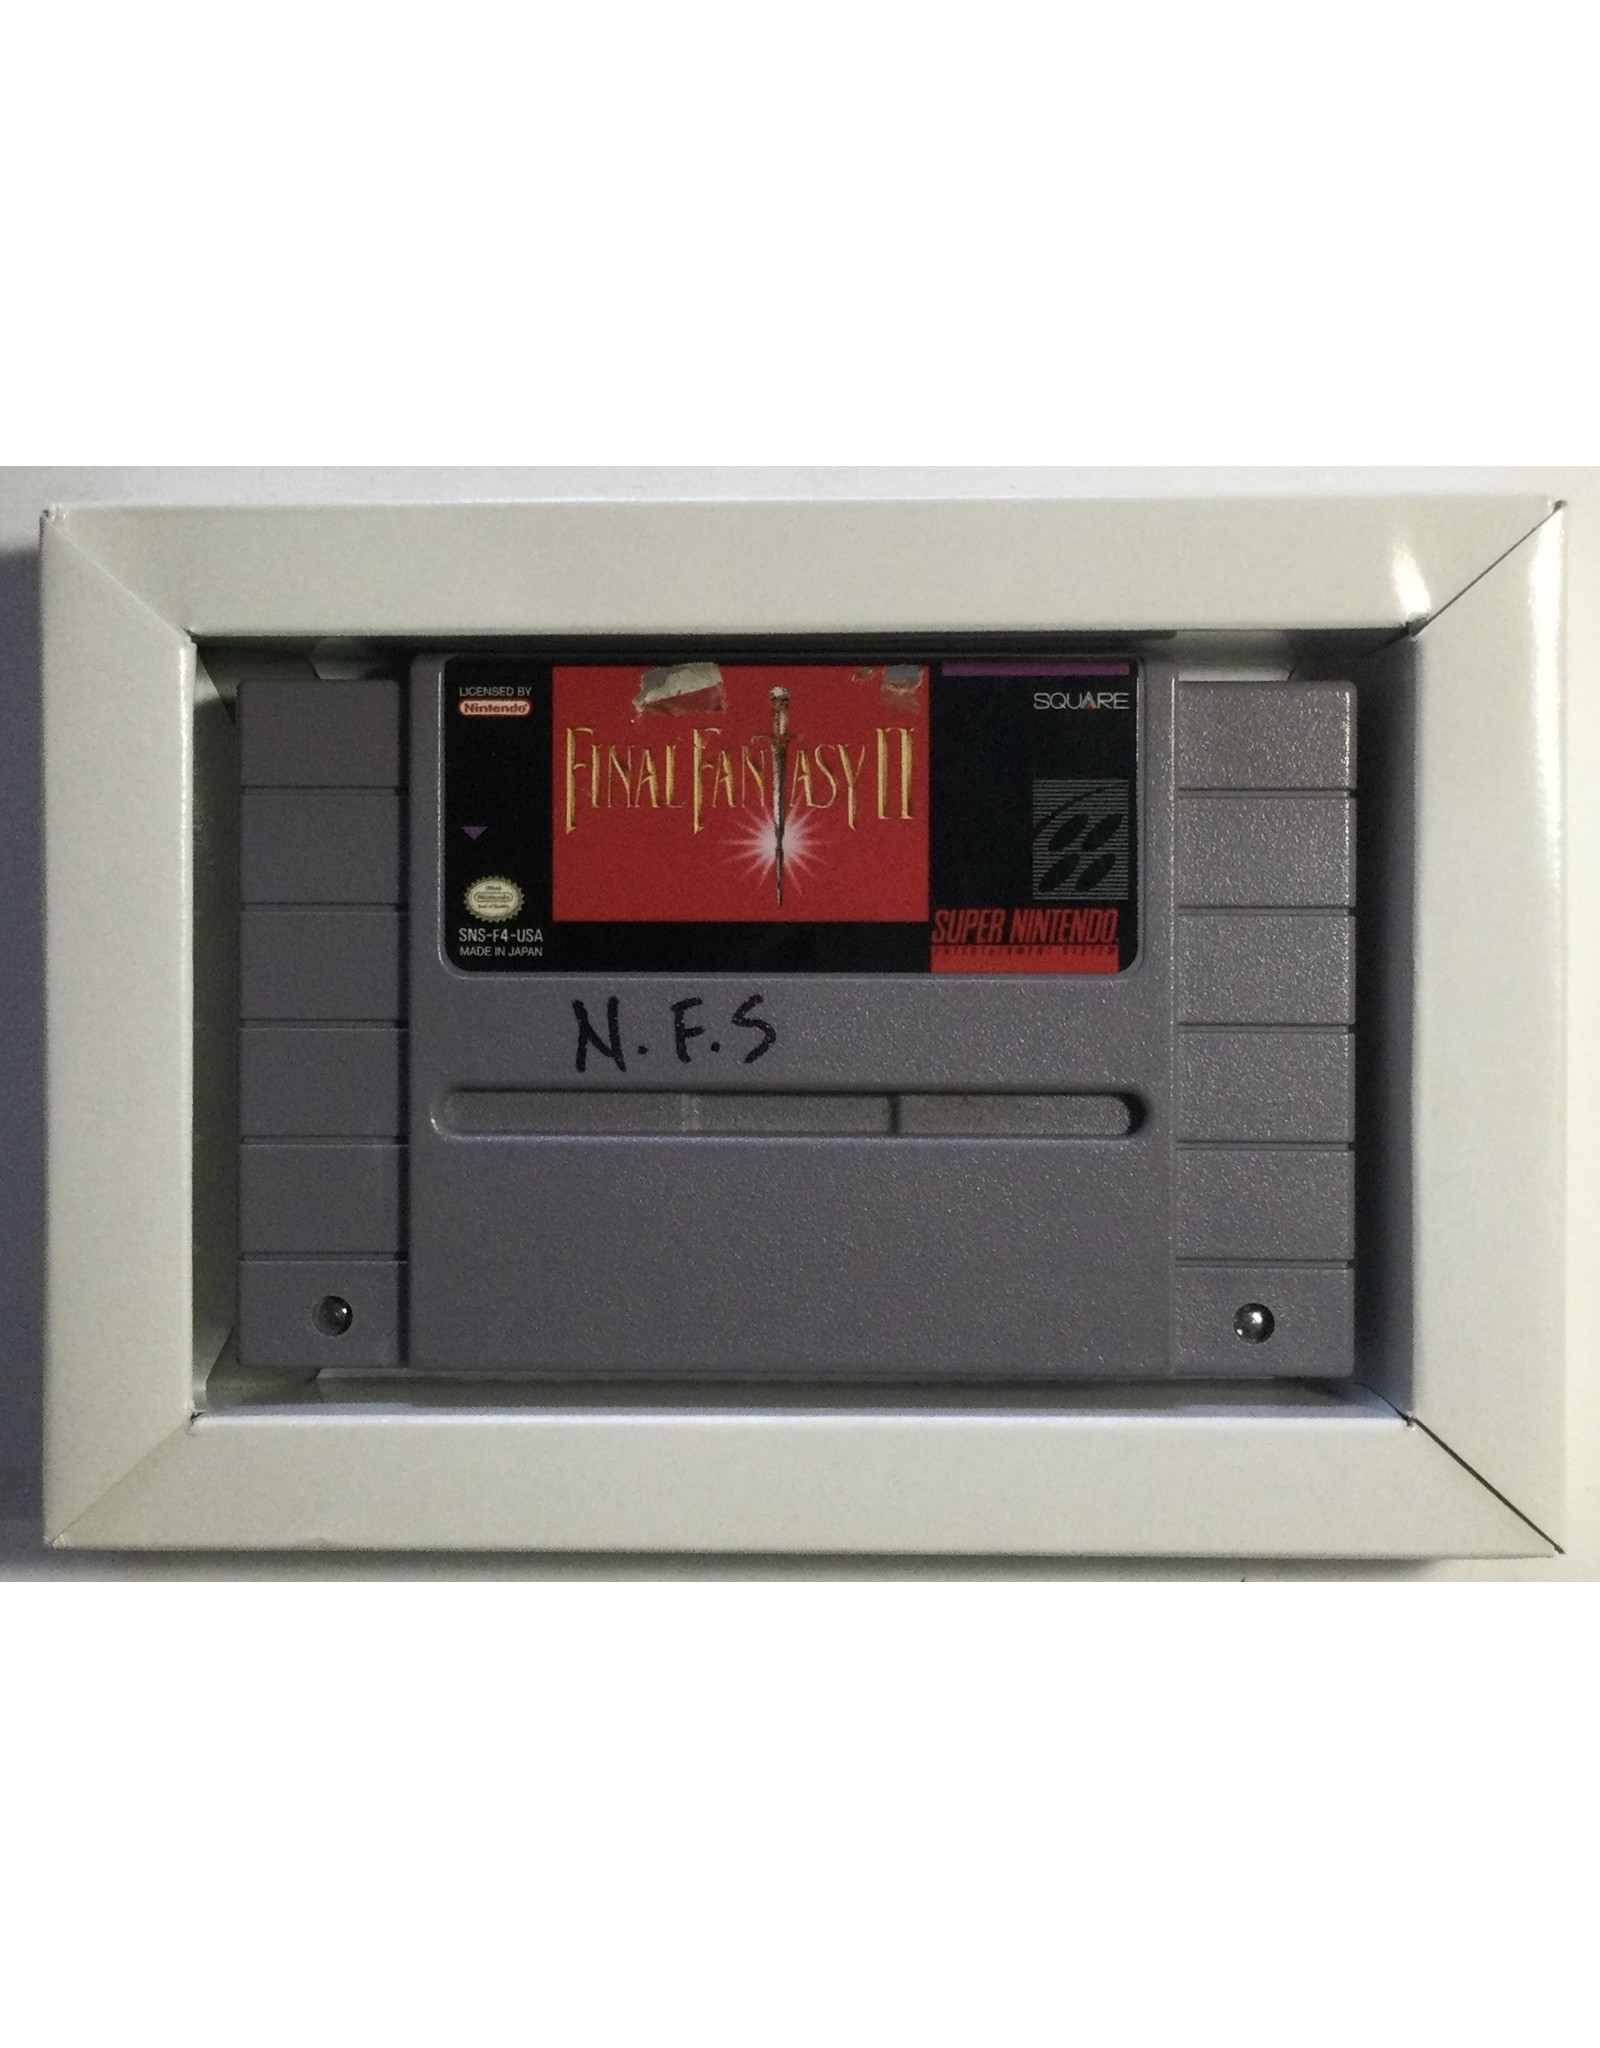 SQUARE Final Fantasy II for Super Nintendo Entertainment System (SNES)